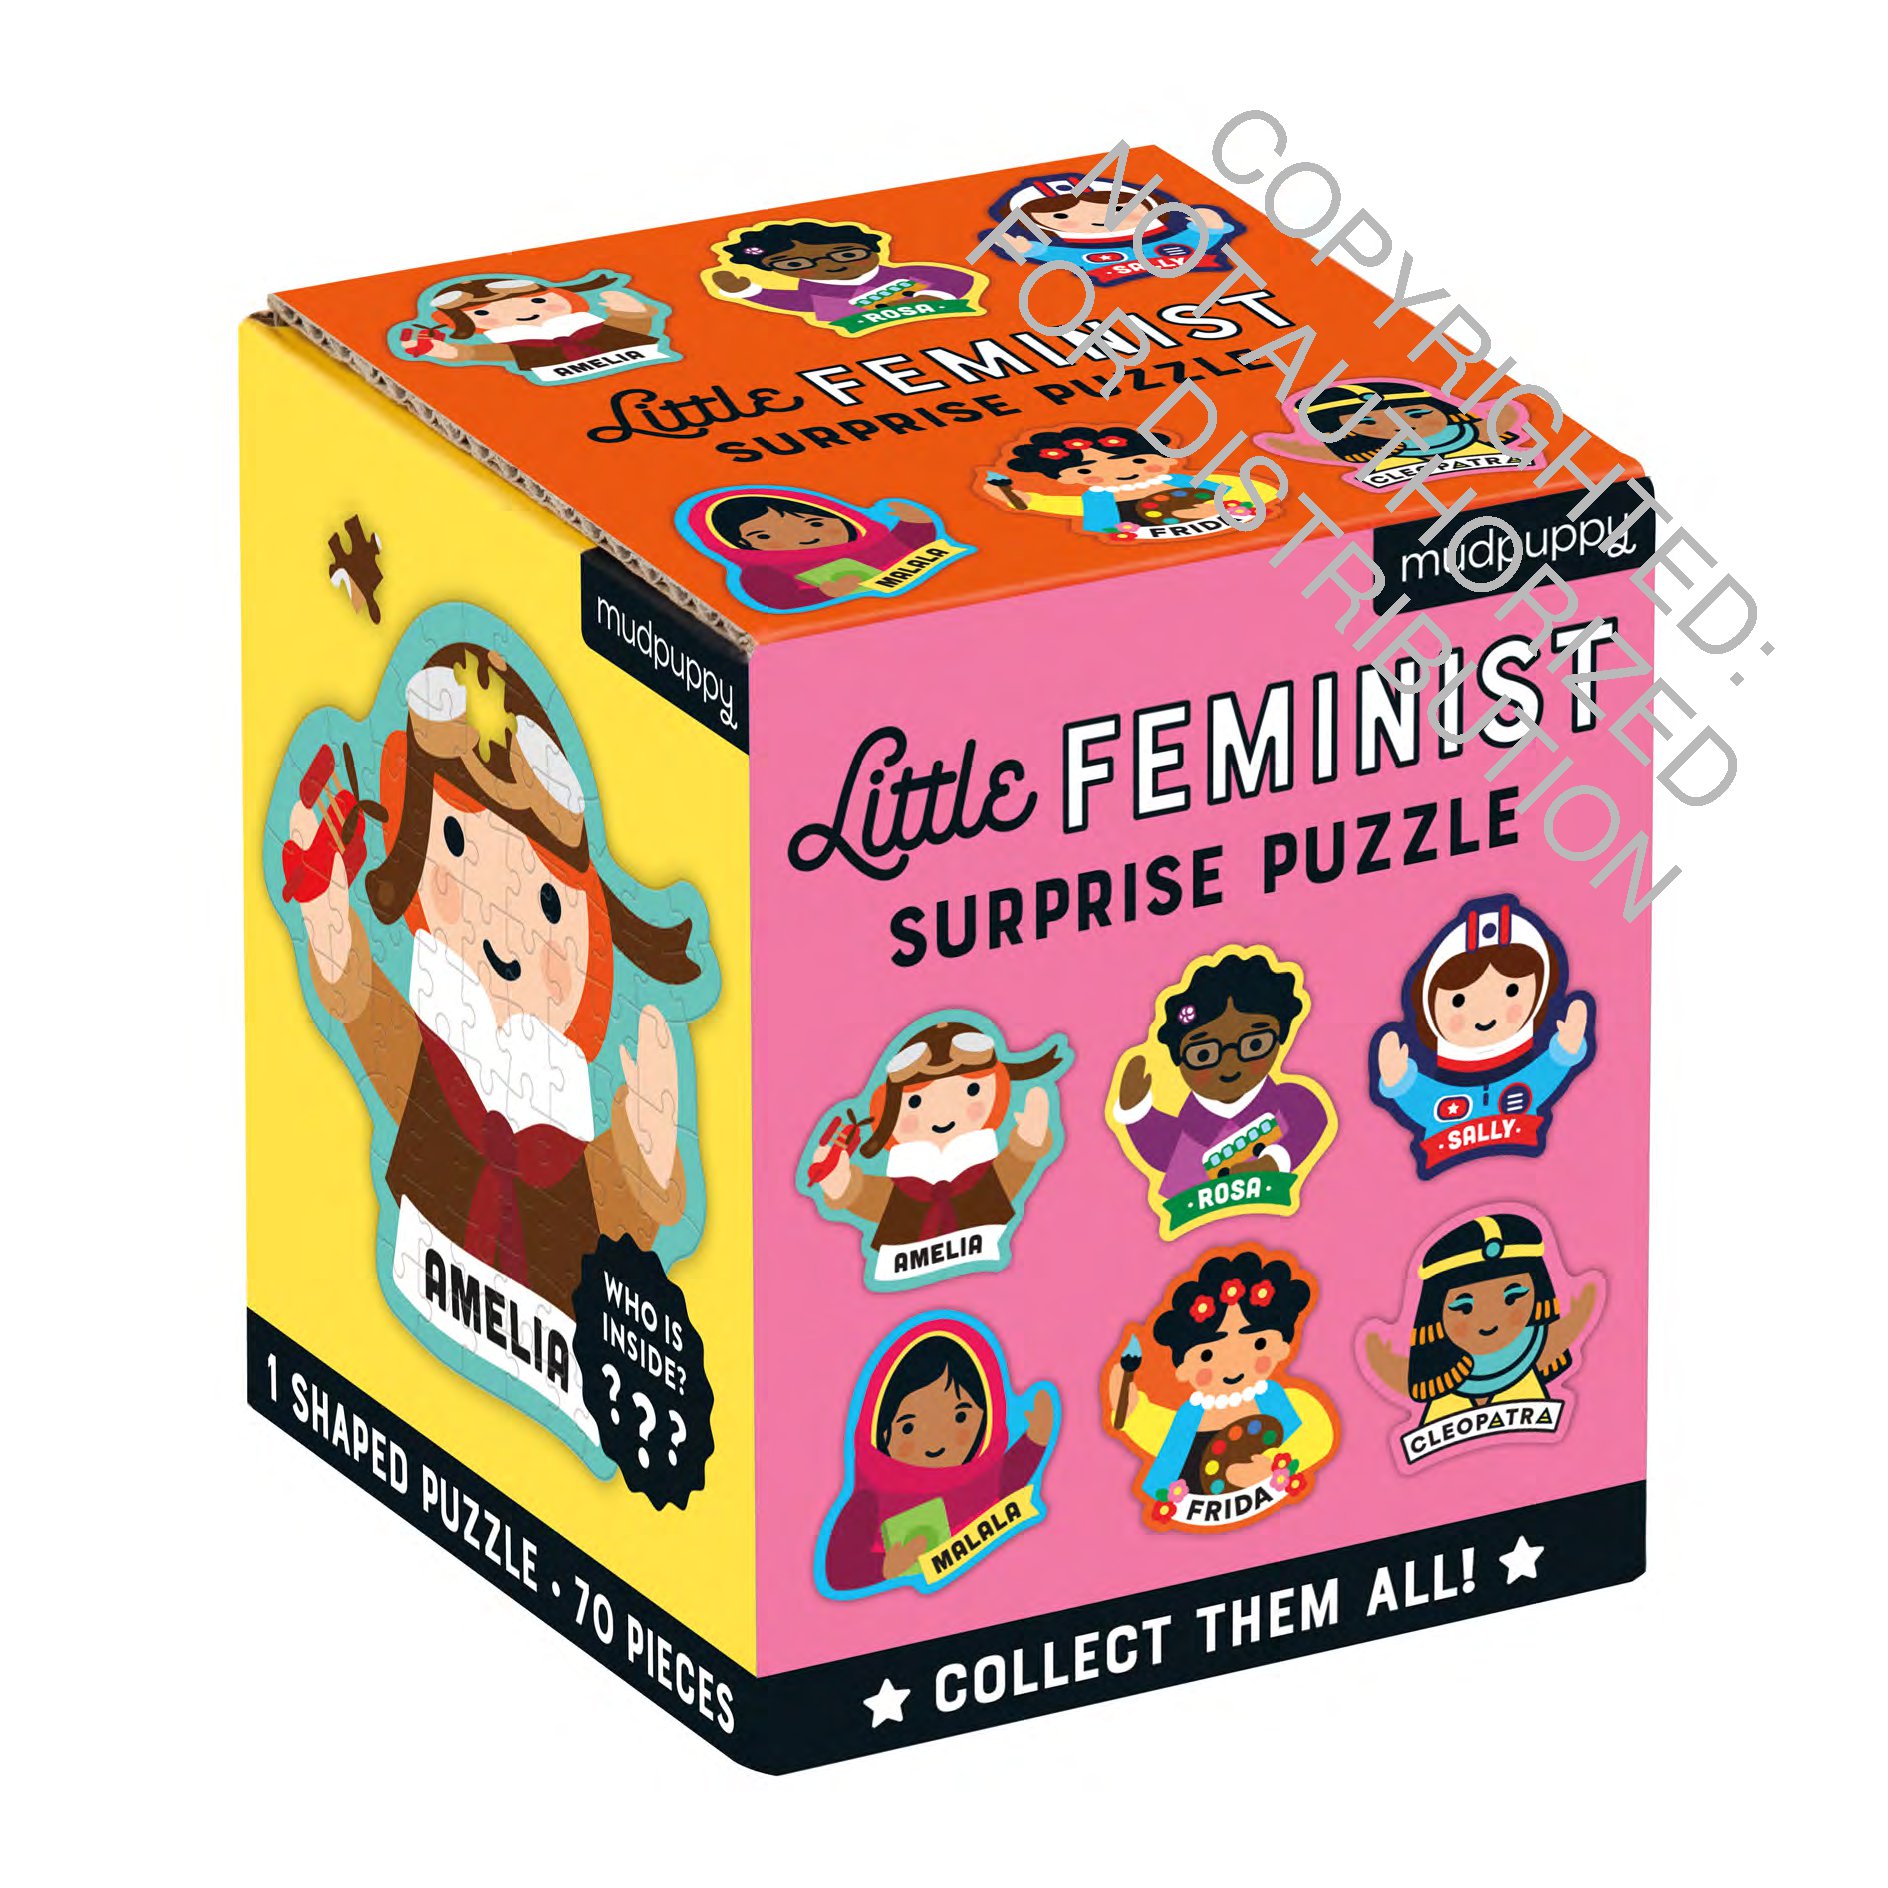 Little Feminist Surprise Puzzle